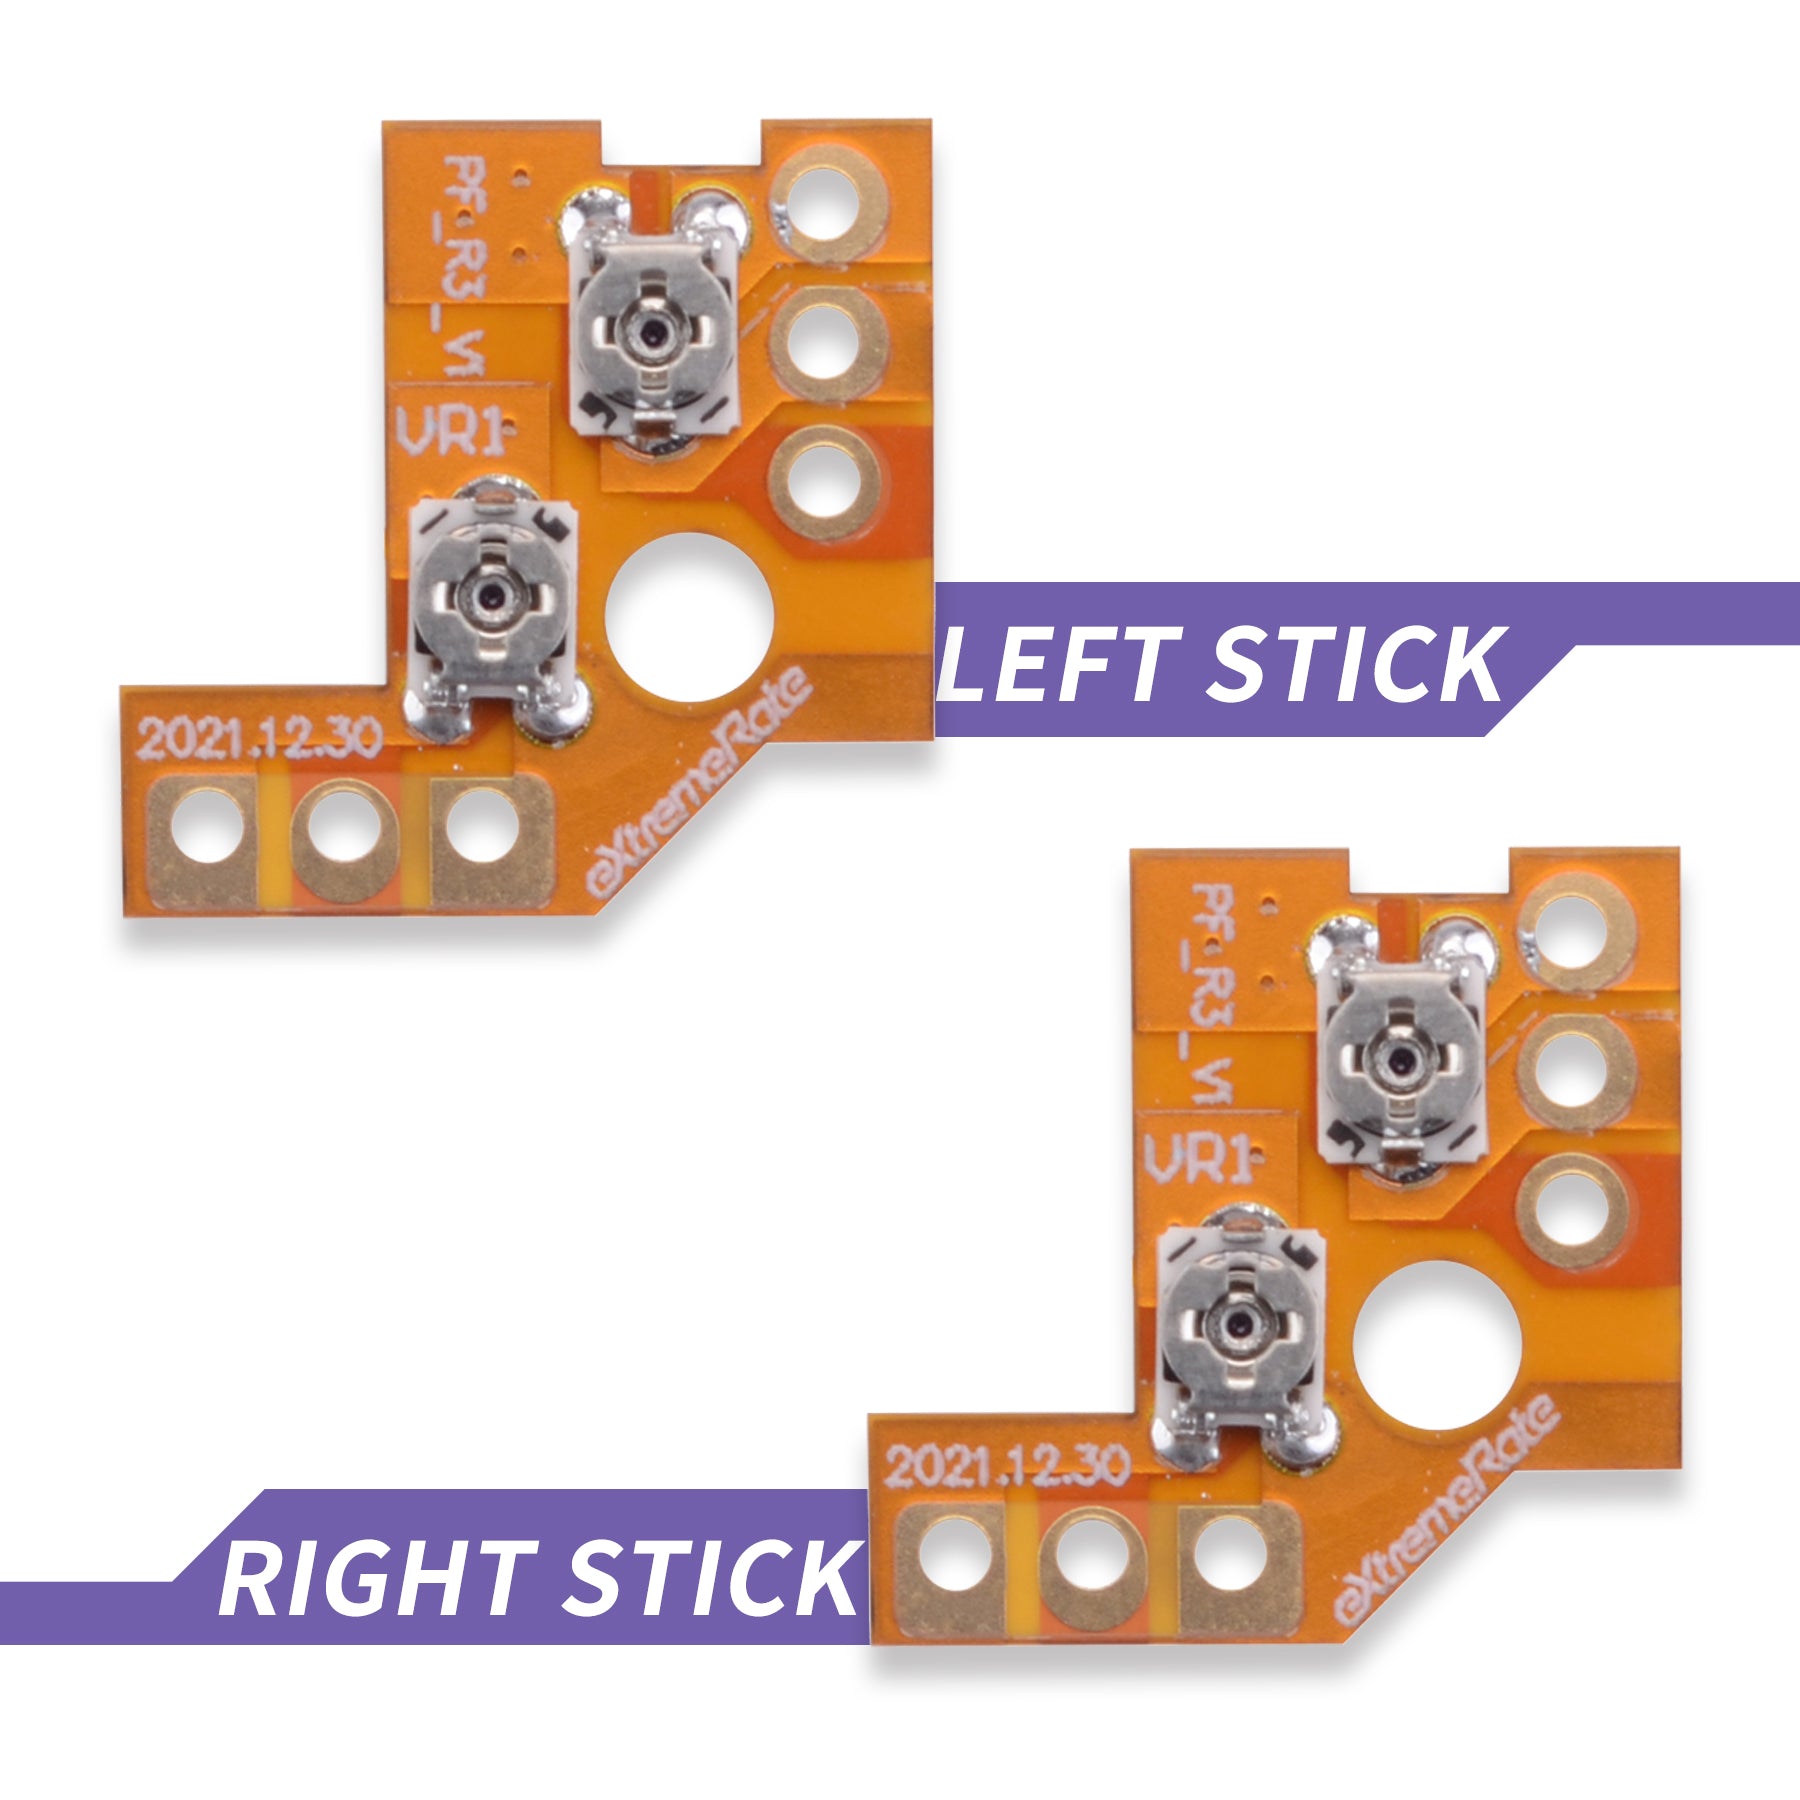 eXtremeRate Retail Drifix Thumbsticks Drift Fix Repair Kit for PS4 Slim Pro Controller (JDM-040/050/055), Custom Analog Stick Joystick Regulator Circuit Board for PS4 Slim Pro Controller - P4MD004